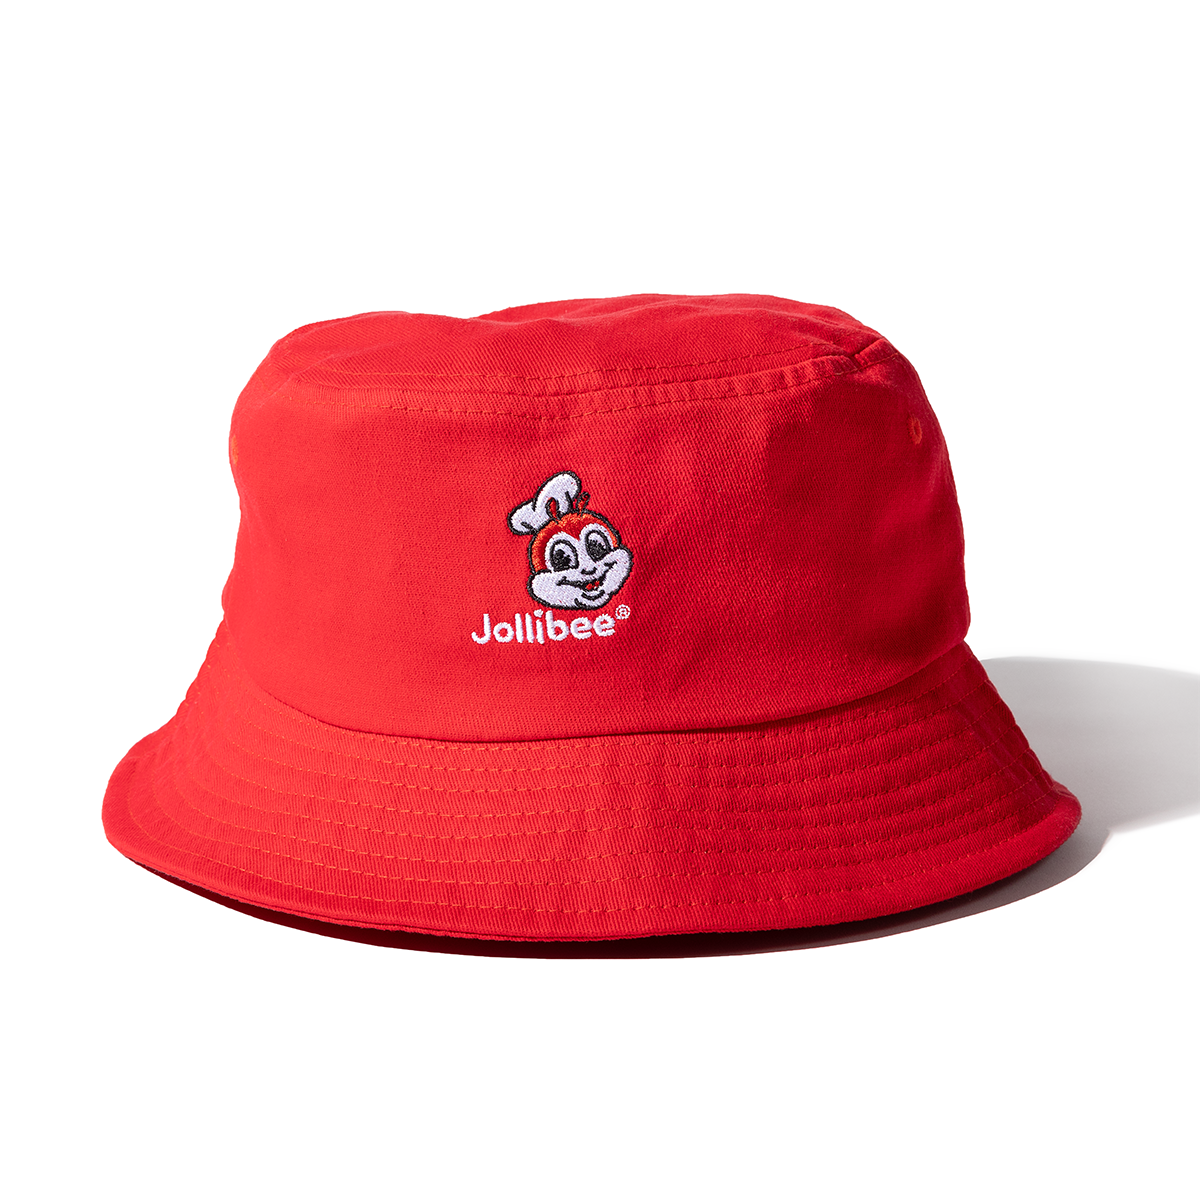 Red Bucket Hat